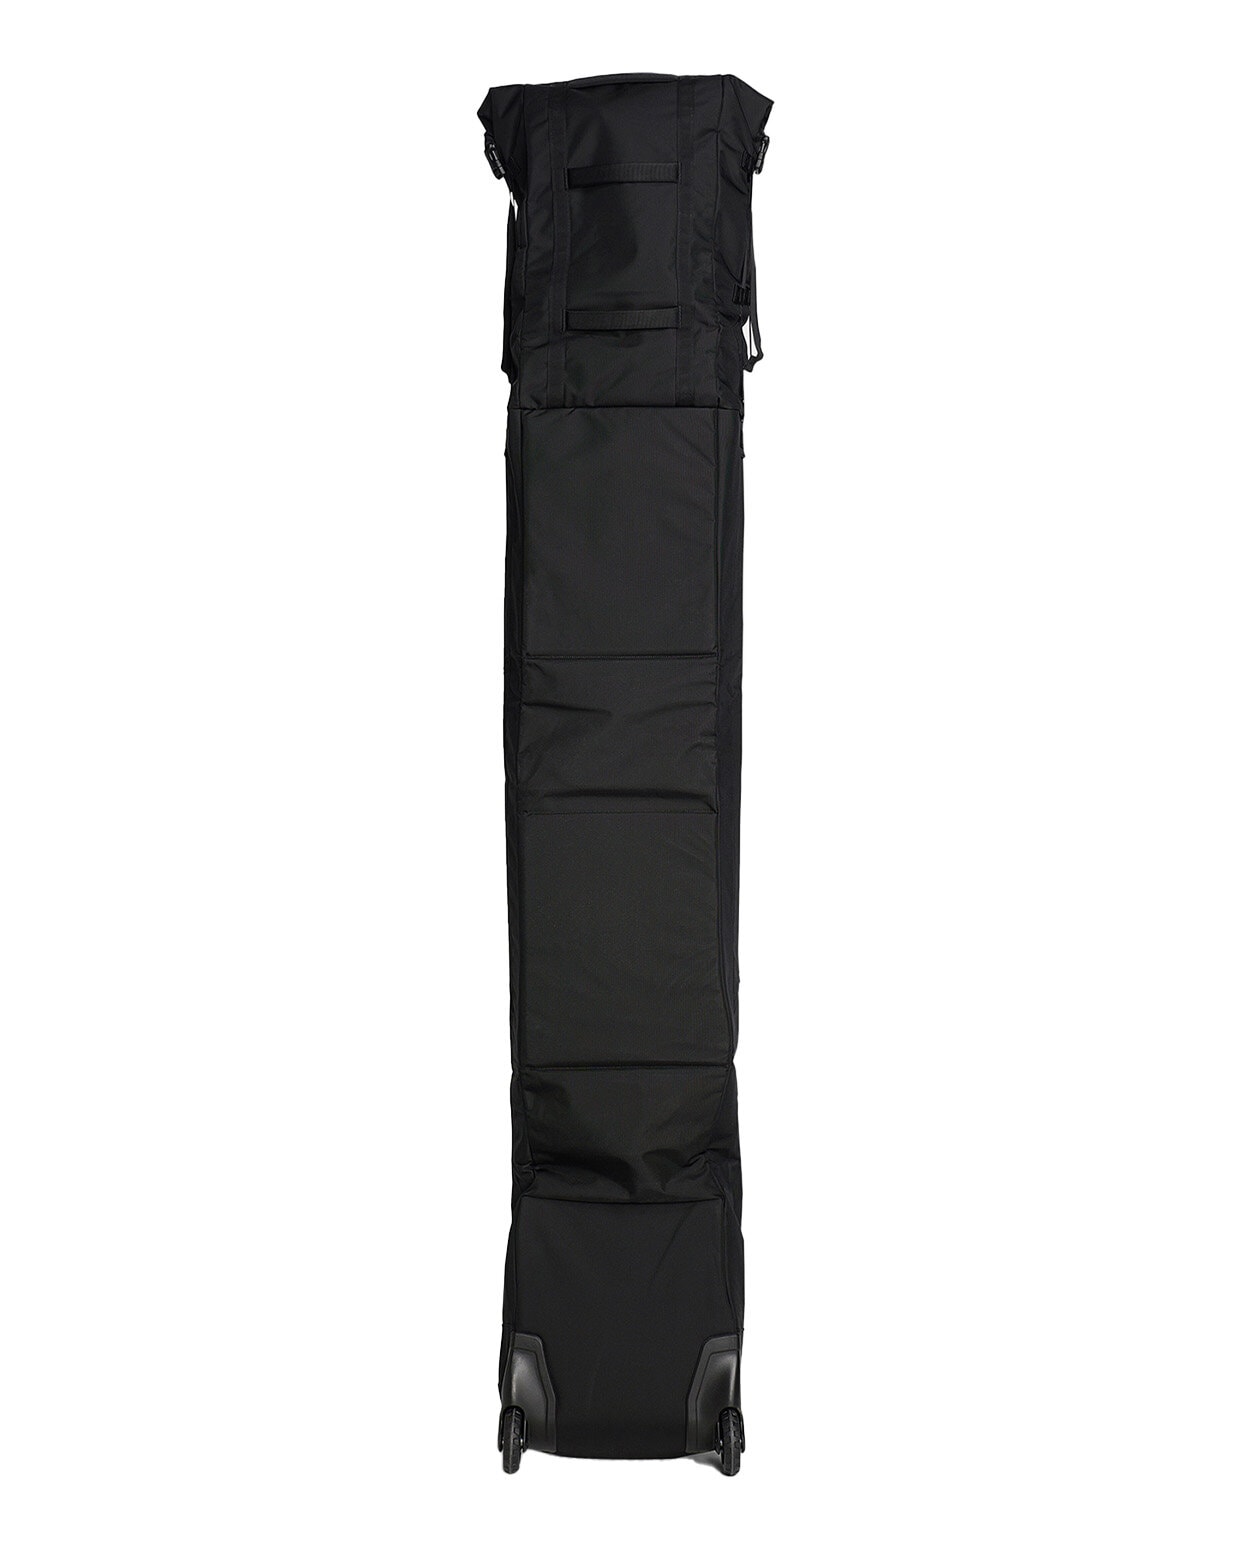 Peak Performance Vertical Ski Bag Black